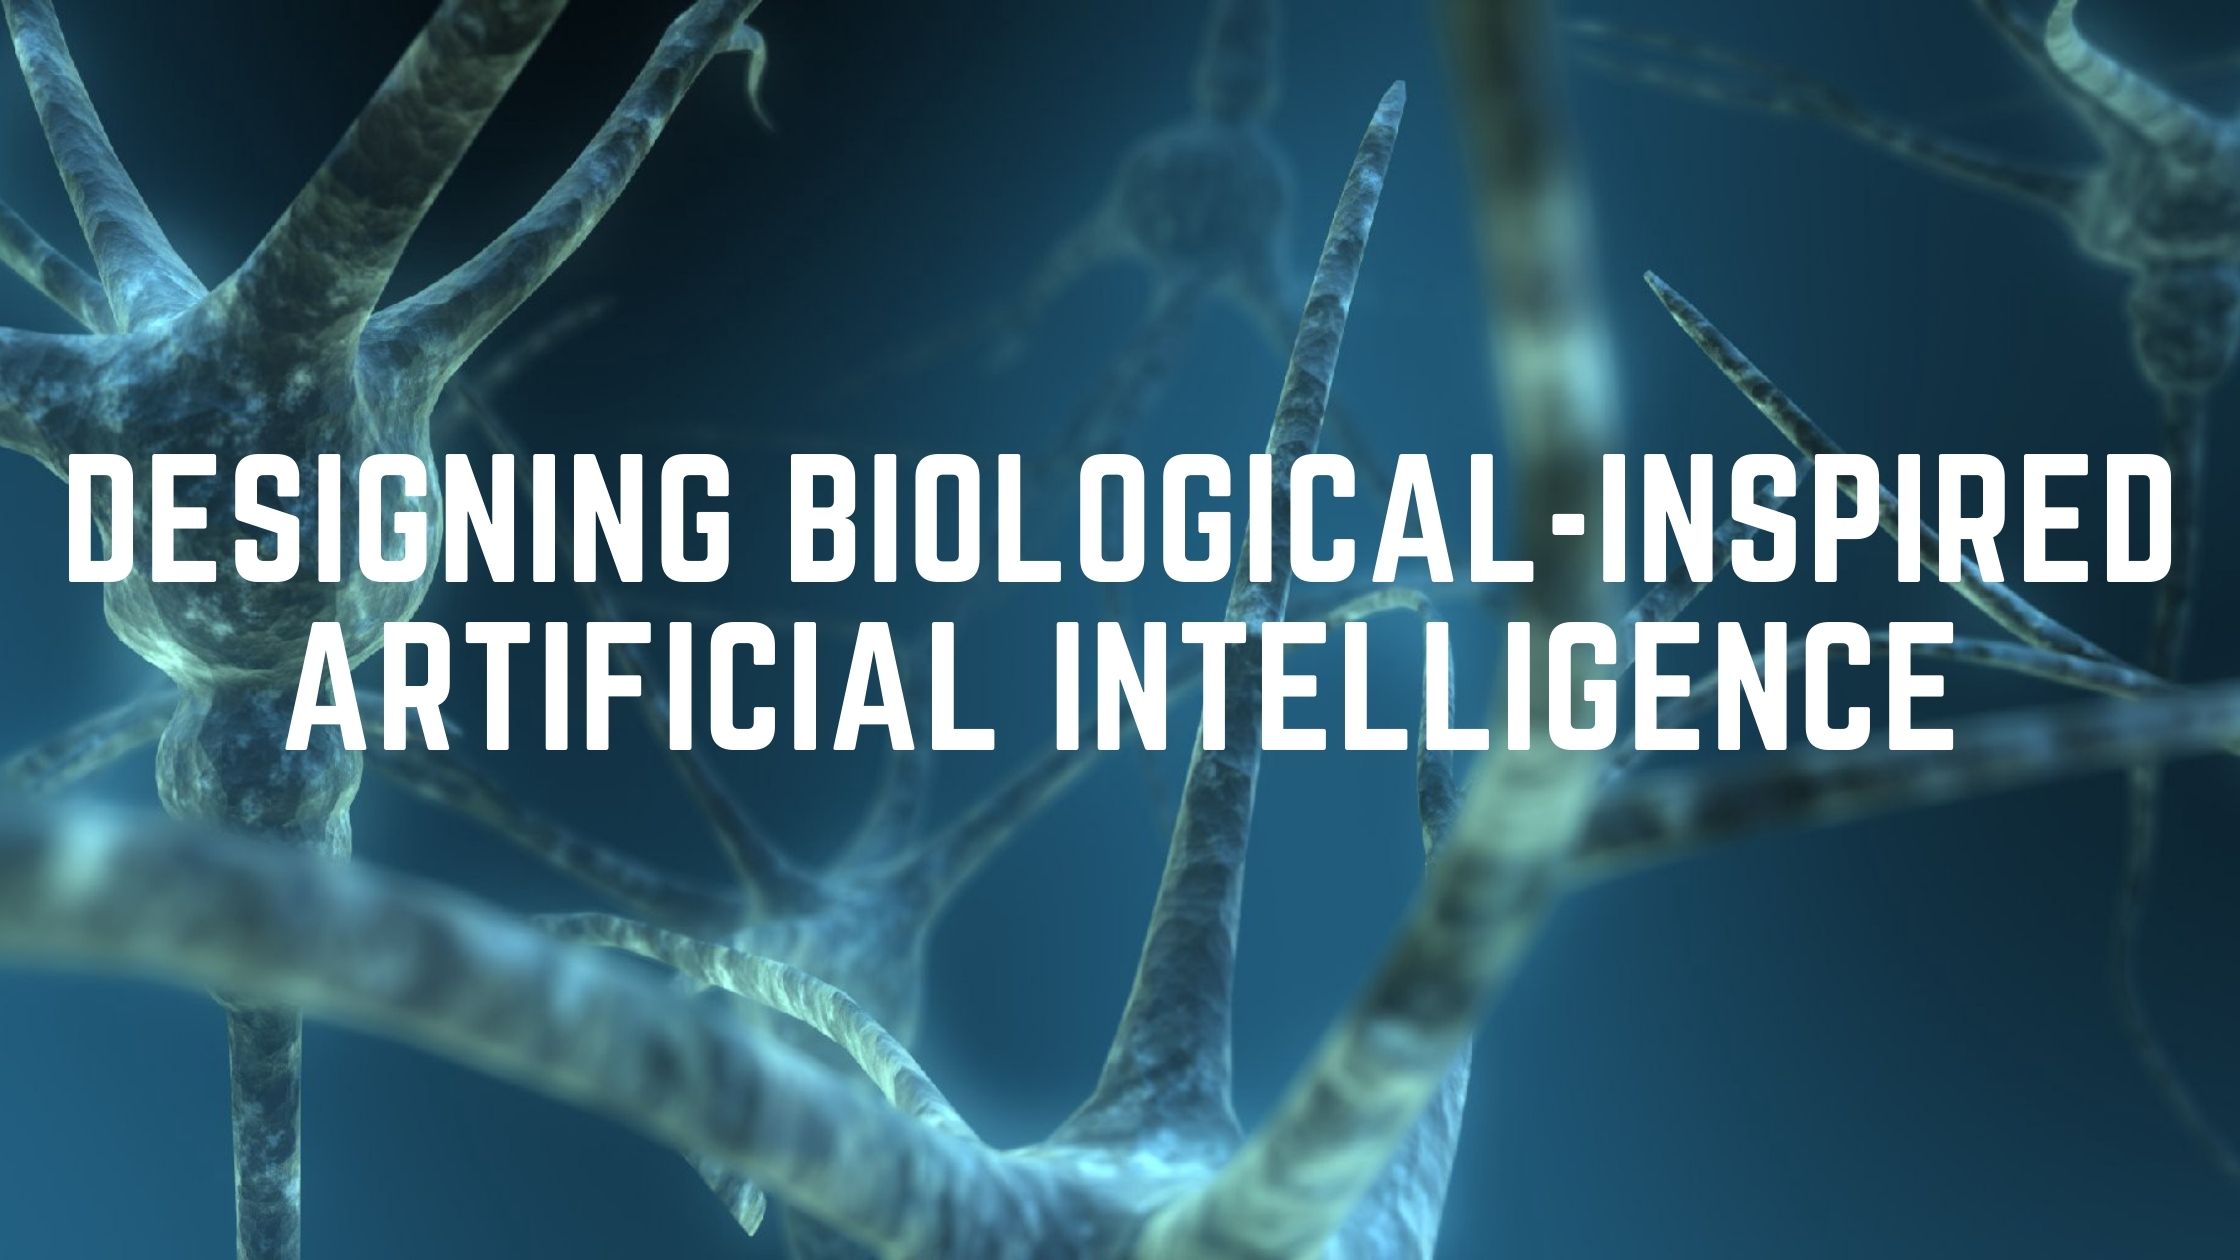 Designing Biological-Inspired Artificial Intelligence